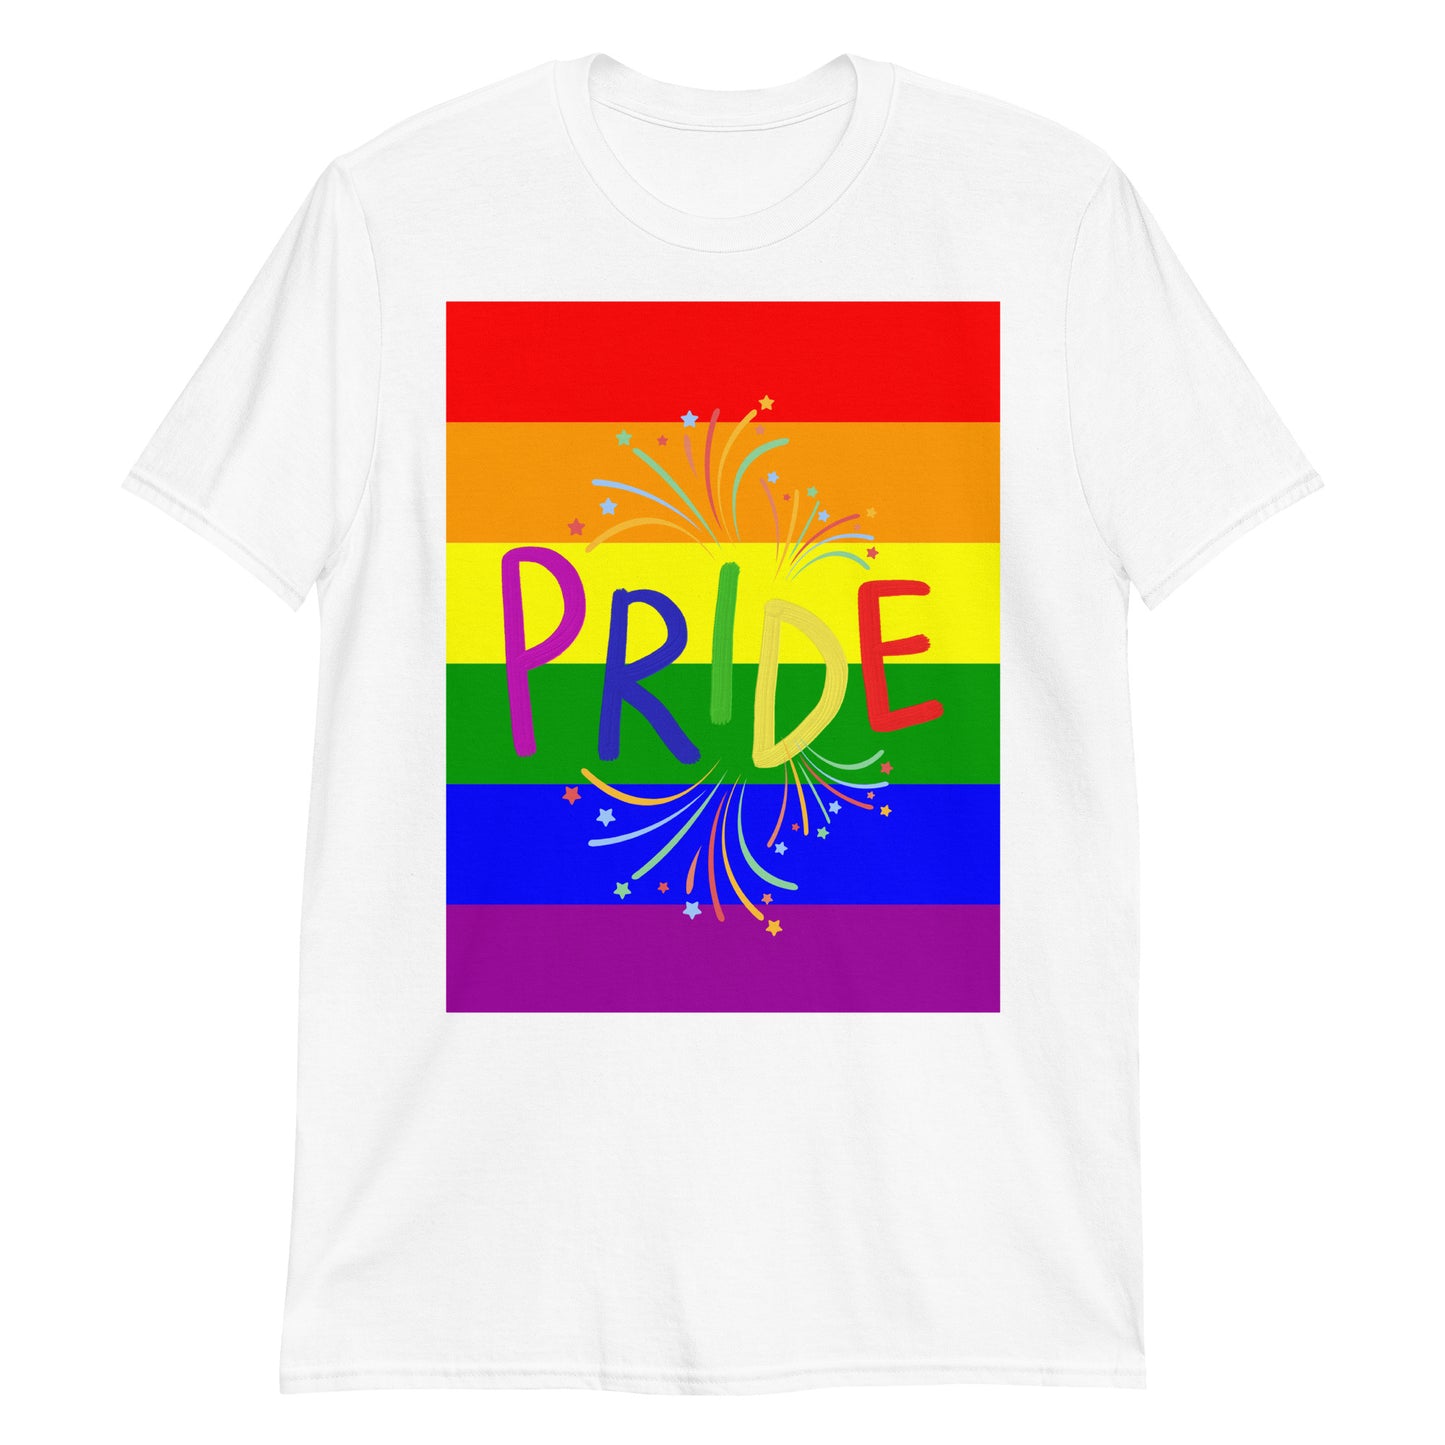 Short-Sleeve Pride T-Shirt